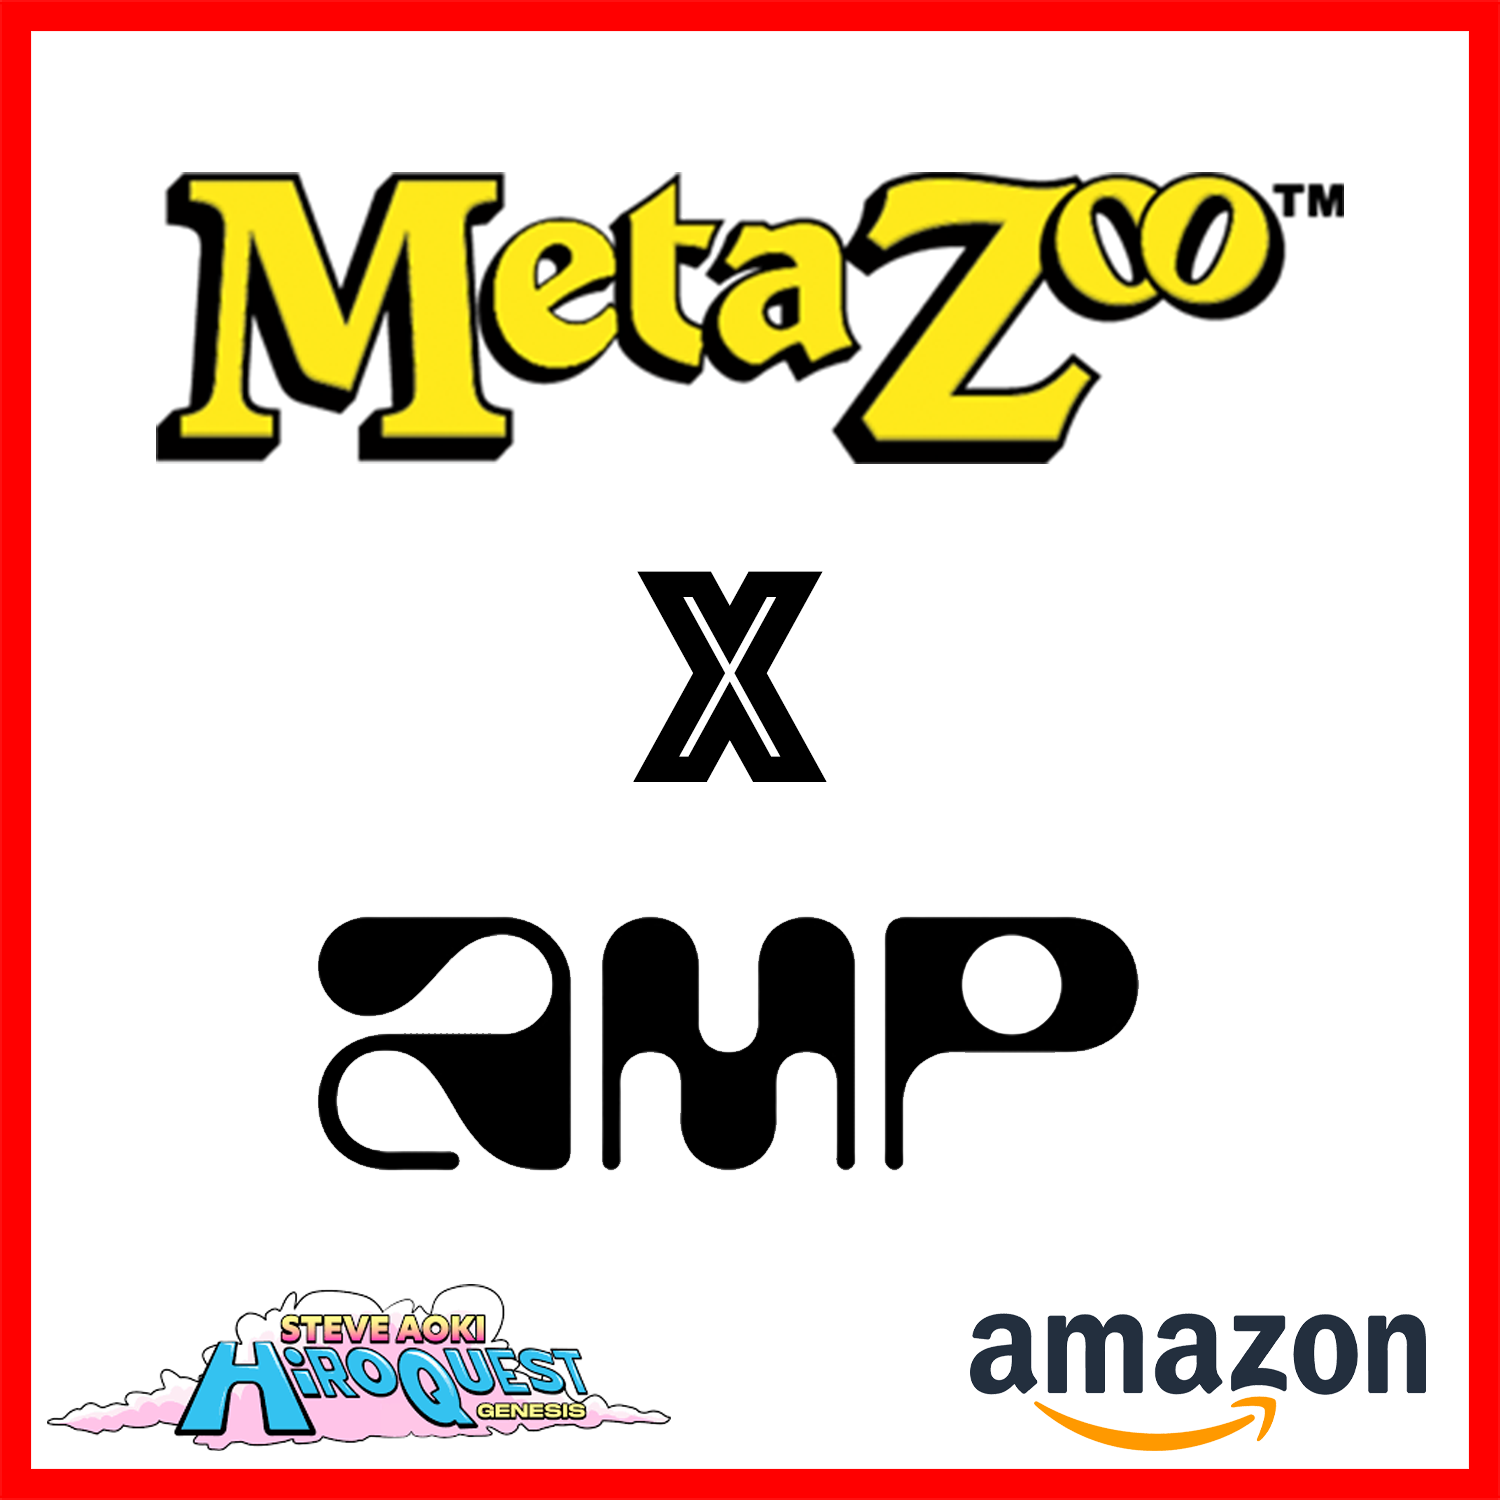 MetaZoo Announces Partnership With Amazon’s Amp